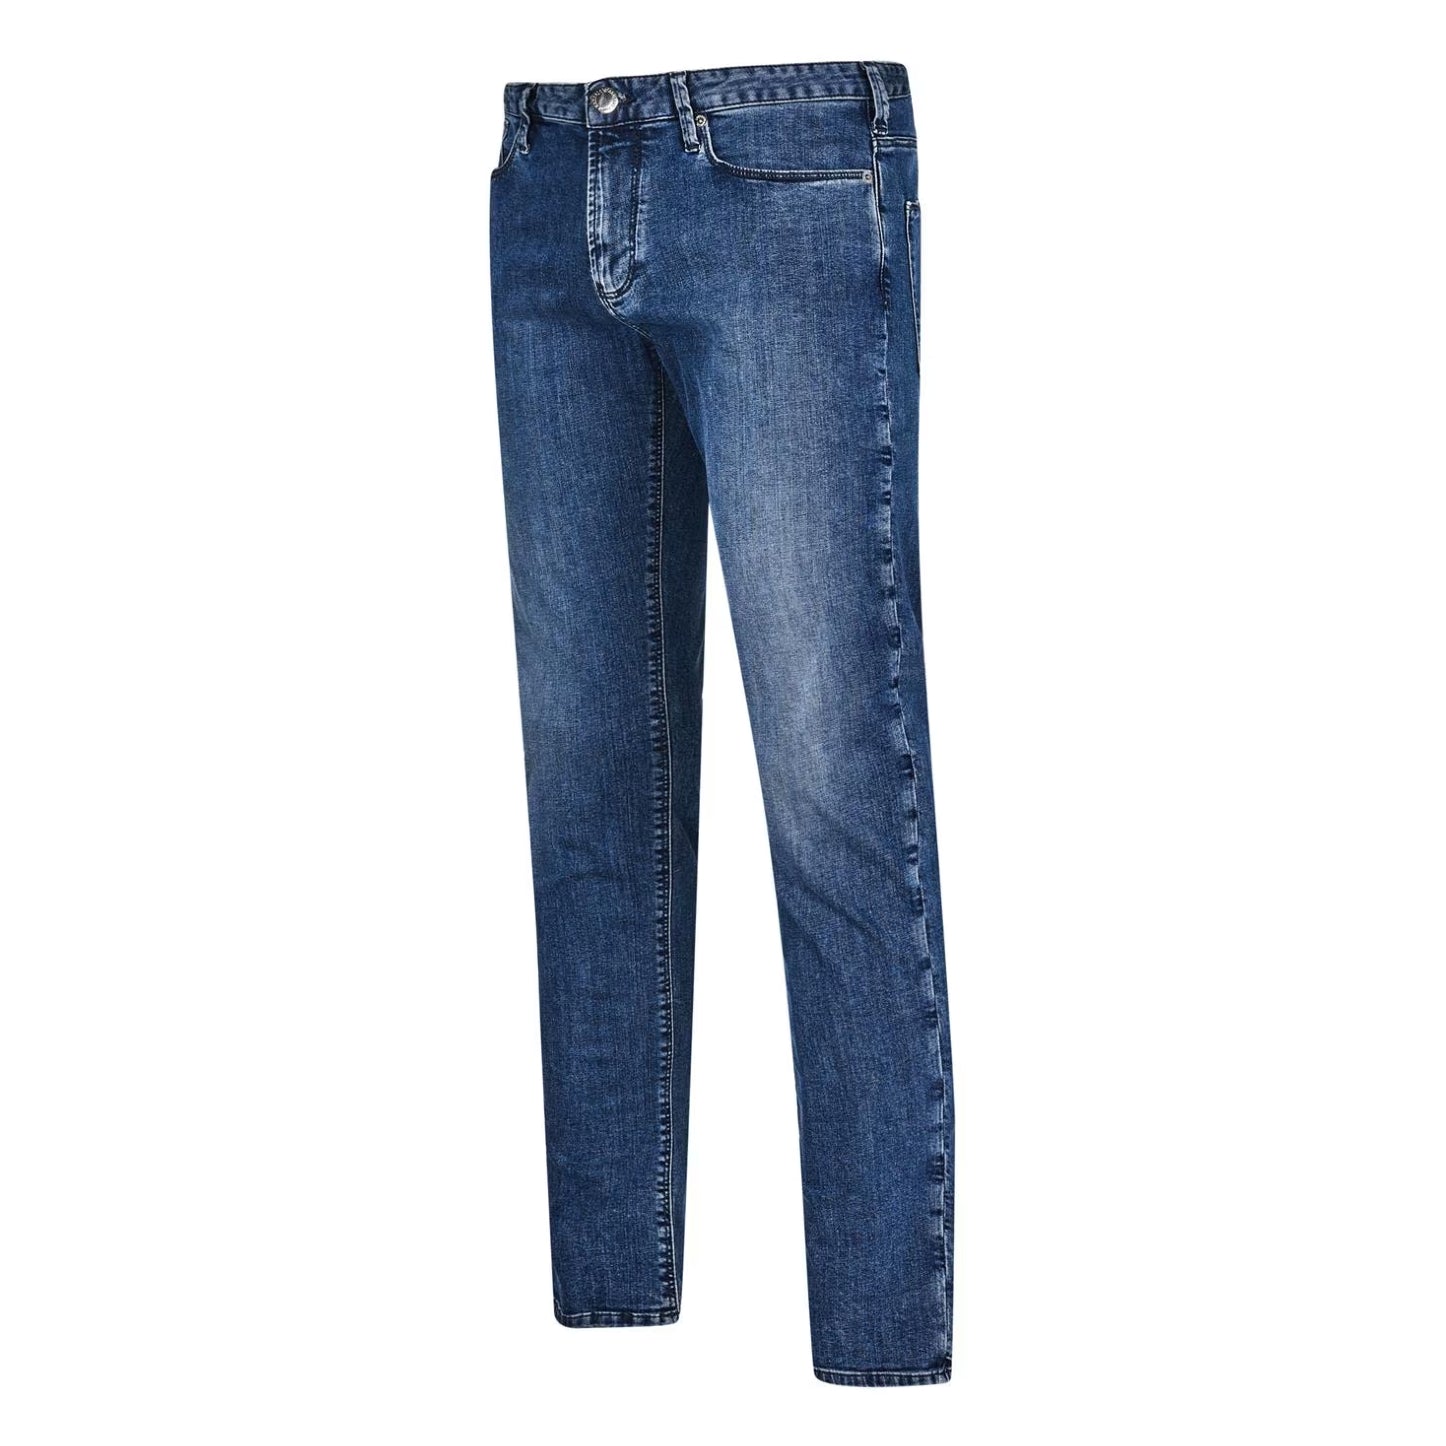 Emporio Armani 8N1J06 1G19Z Slim Fit Jeans - 0942 Mid Blue - Escape Menswear